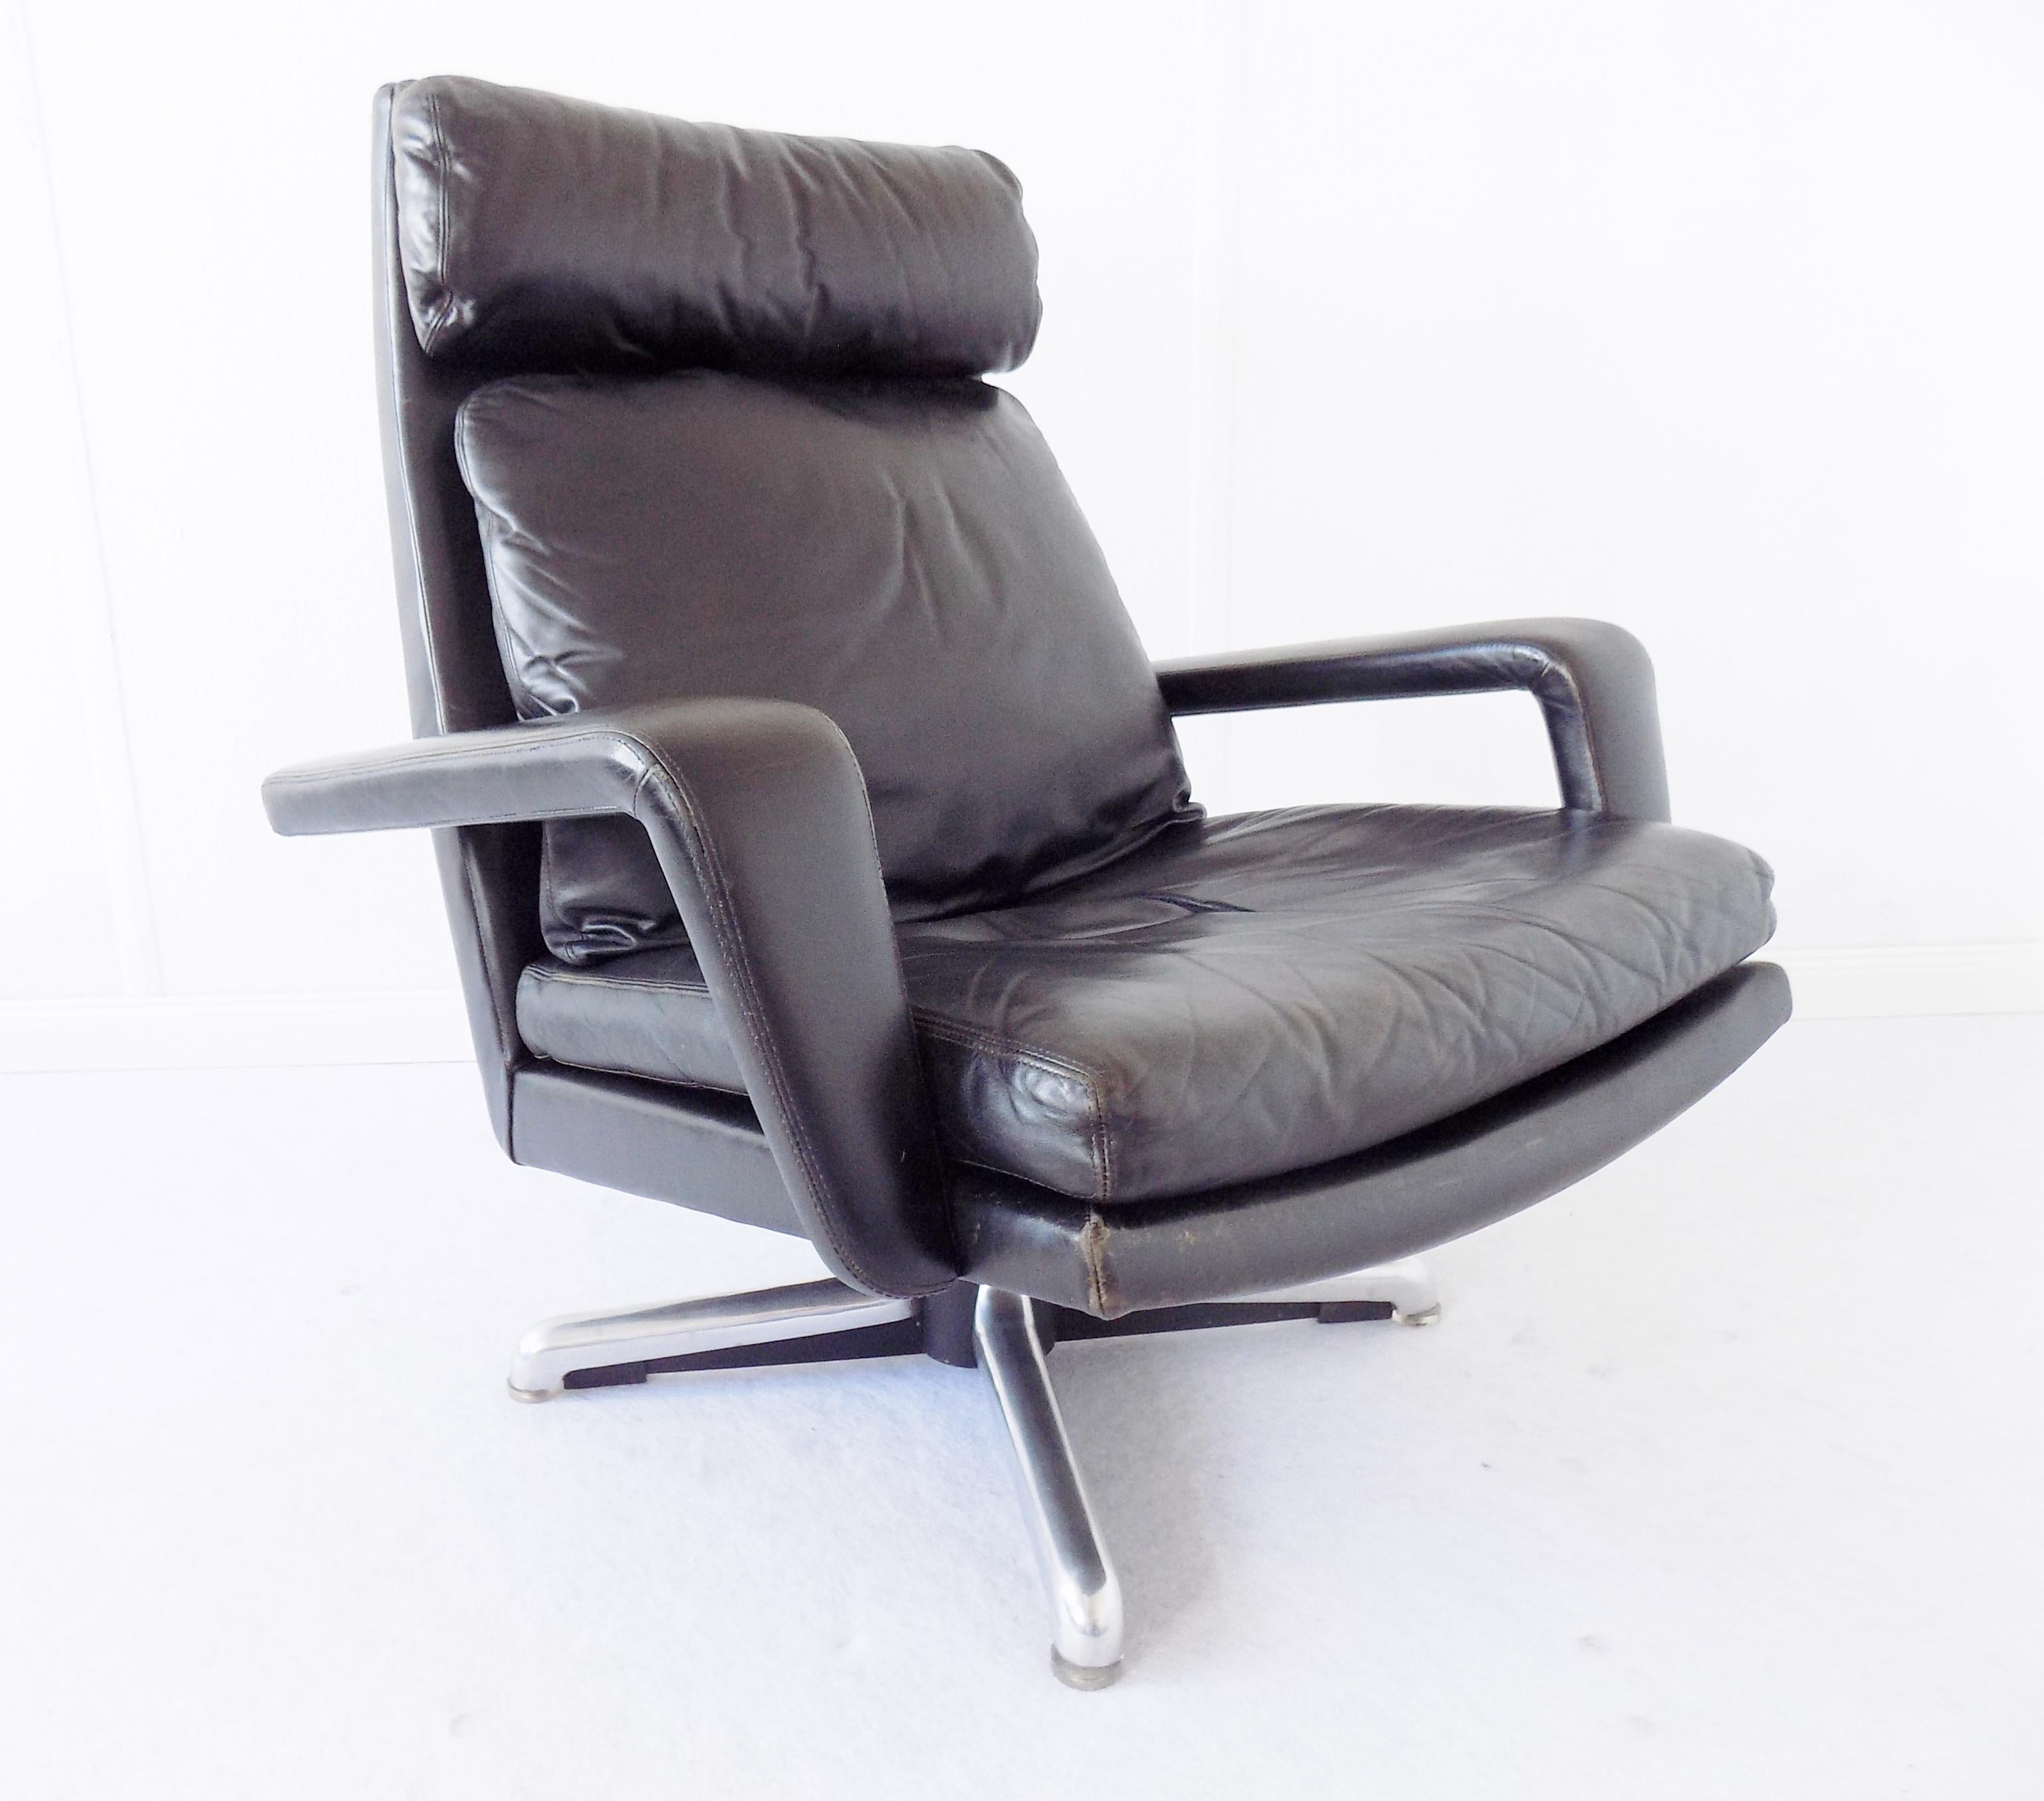 Mid-20th Century Hans Kaufeld Lounge Chair, German, Black leather, mid-century modern, swivel For Sale